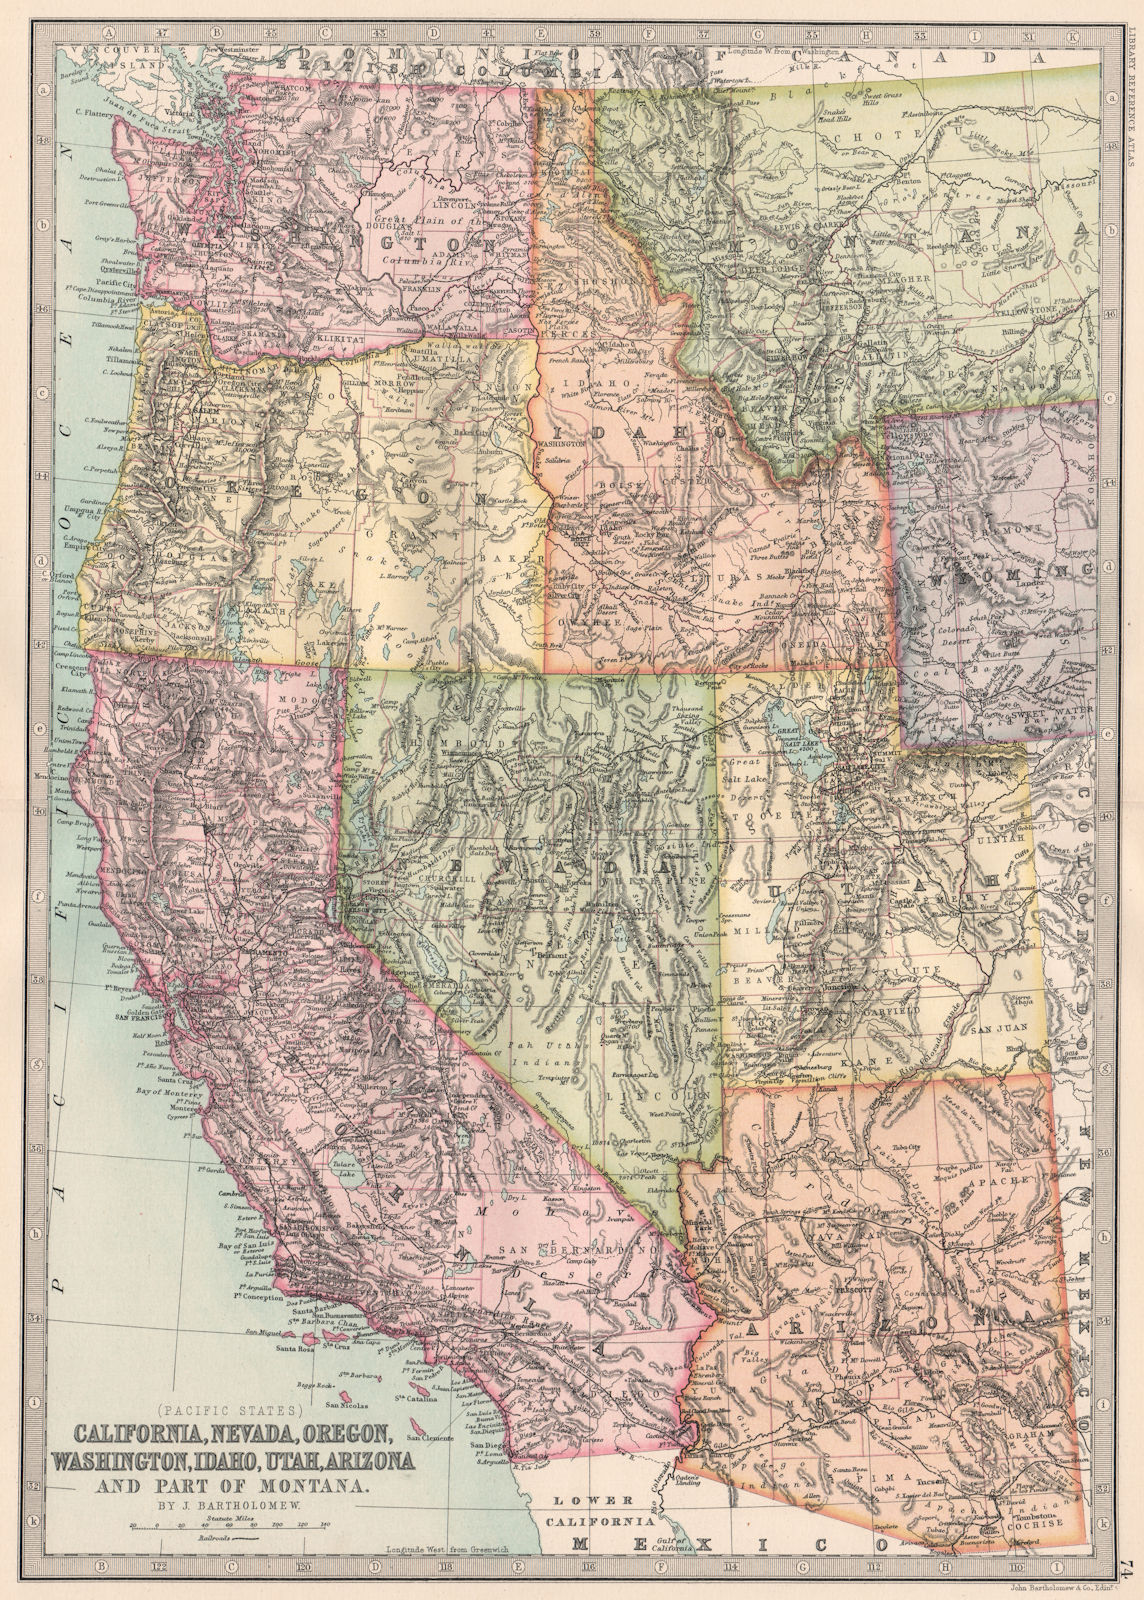 Associate Product USA PACIFIC STATES.California Nevada Oregon Washington Idaho UT Arizona 1890 map